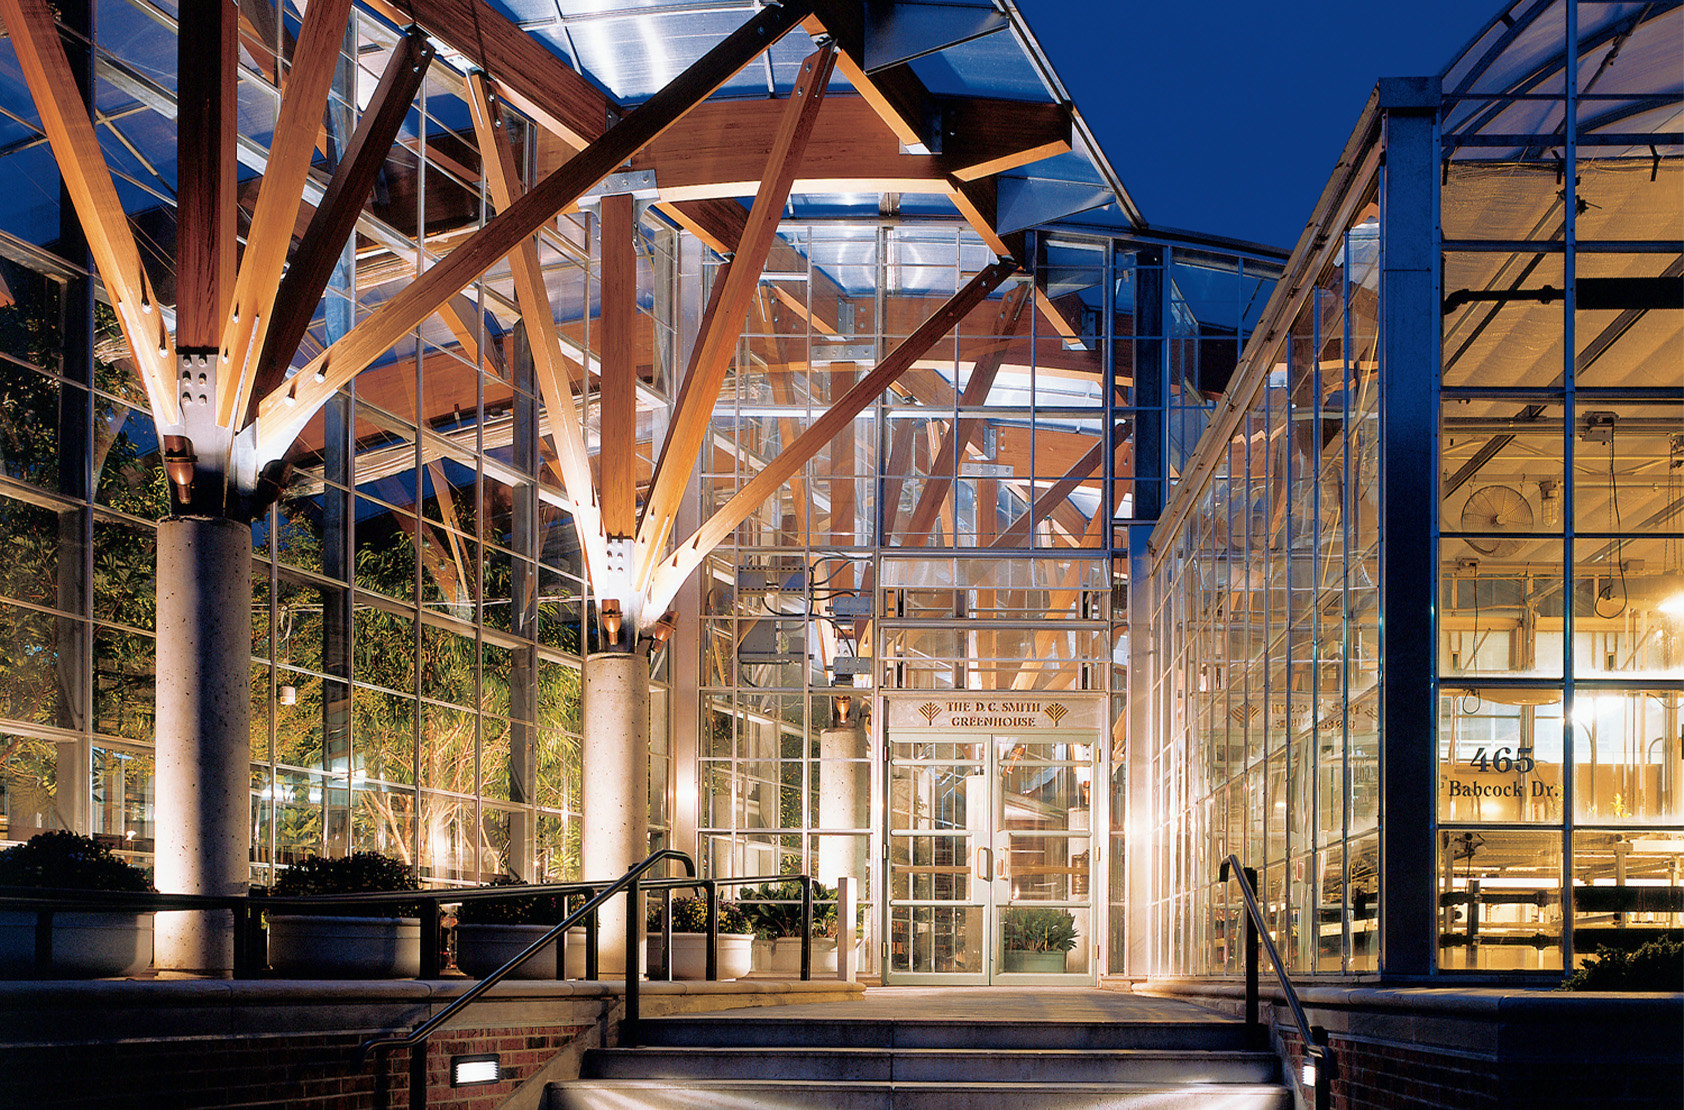 University of Wisconsin - Madison - D.C. Smith Greenhouses